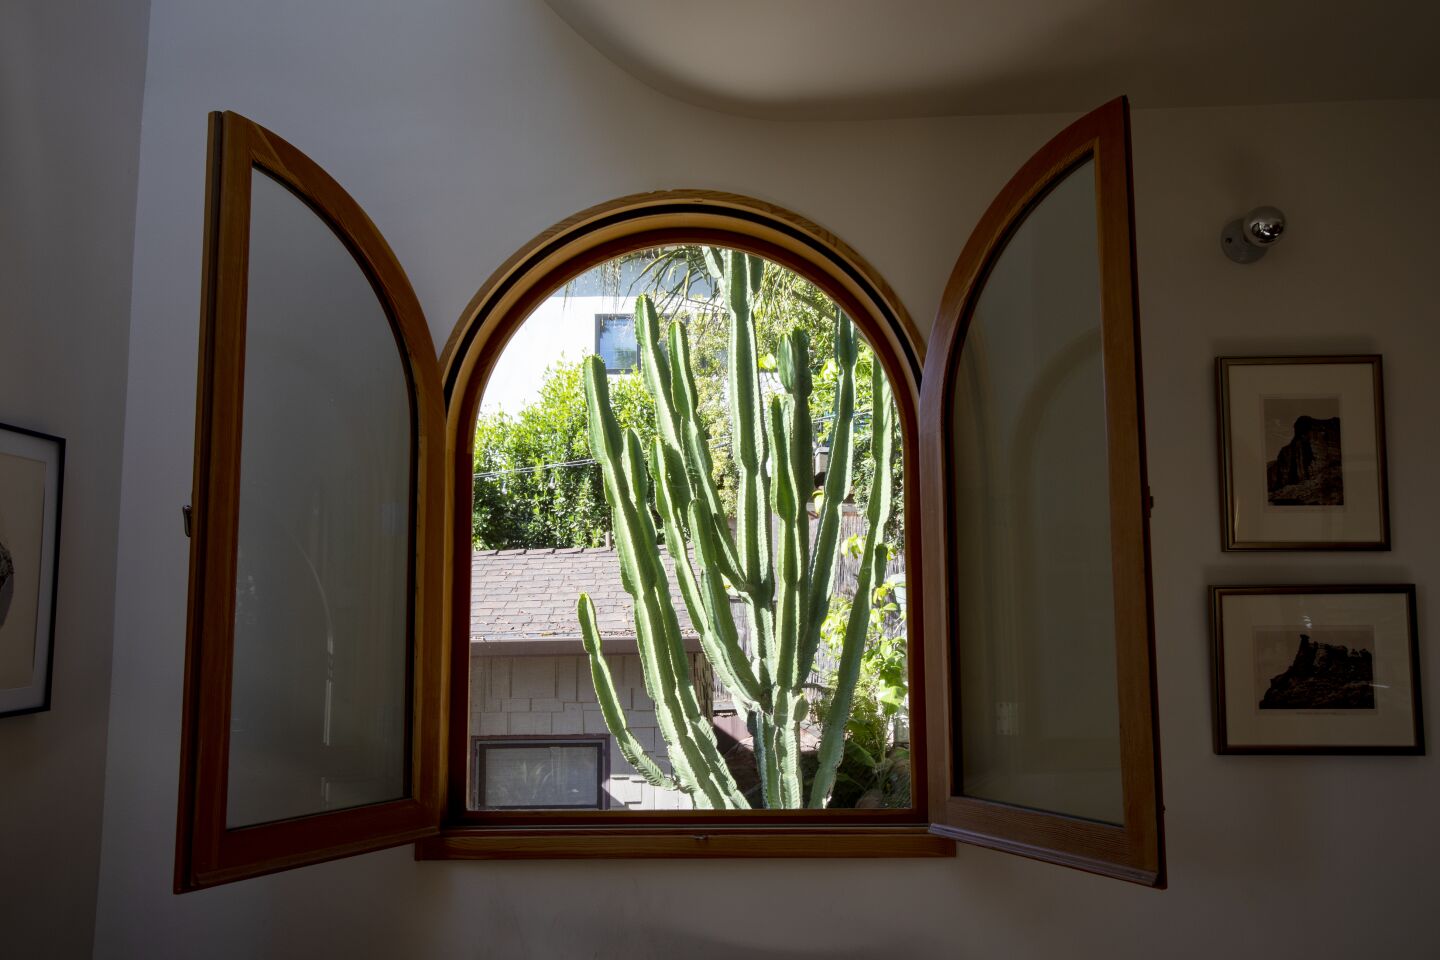 A tall euphorbia cactus grows outside the writing studio.